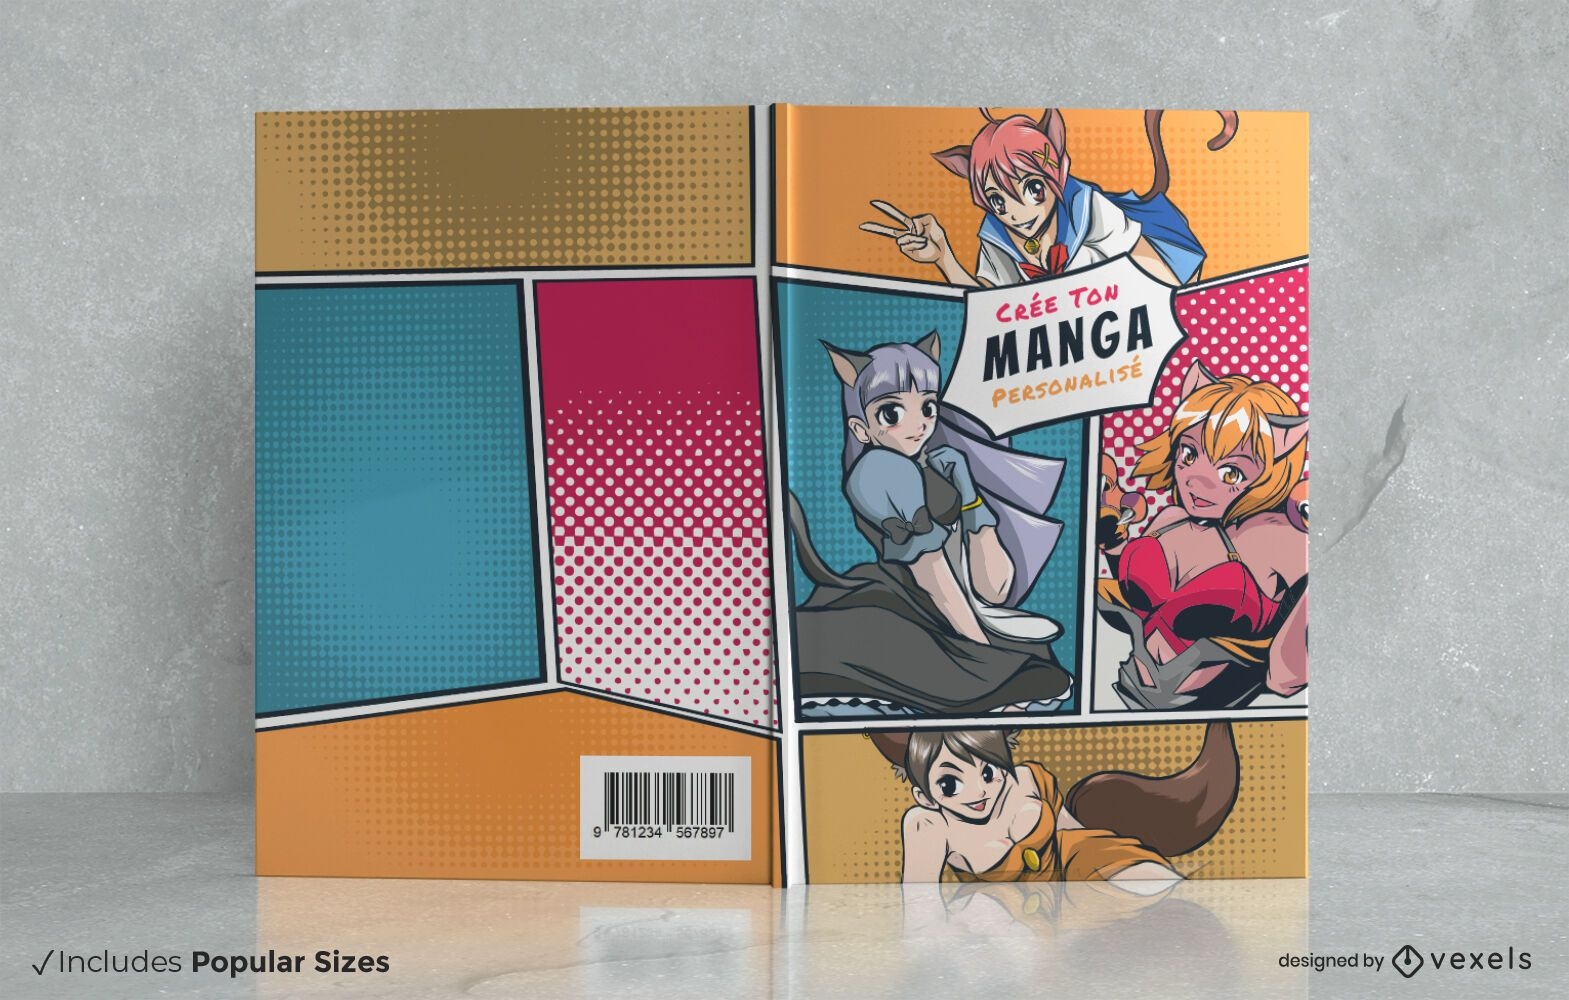 Manga characters comic book cover design